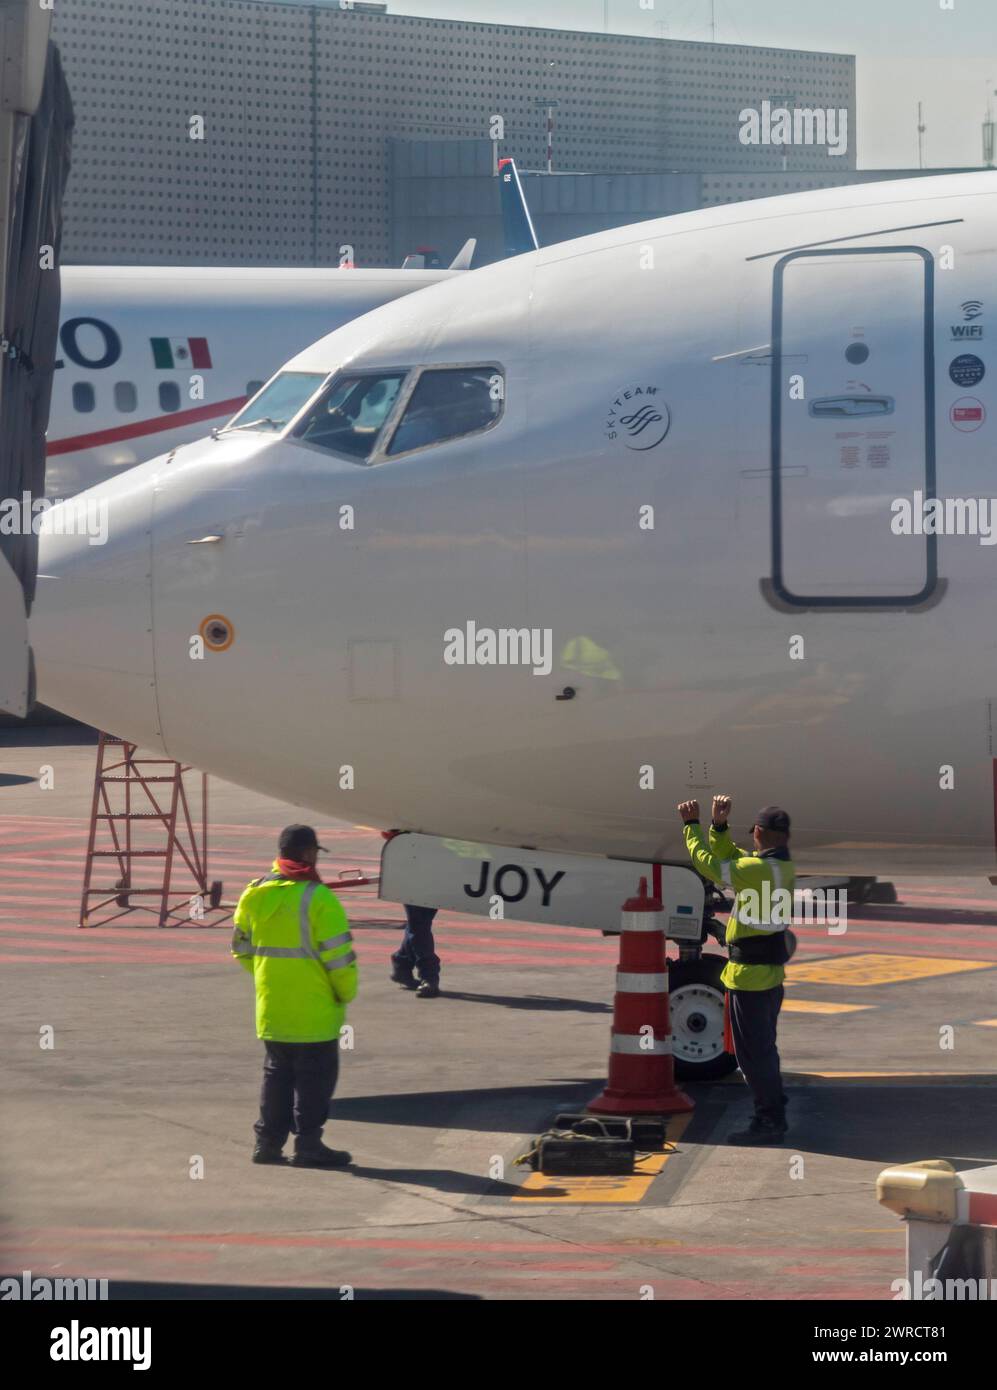 Mexiko-Stadt - AeroMexico Boeing 737 XA-JOY auf dem Asphalt am Flughafen Mexiko-Stadt. Stockfoto